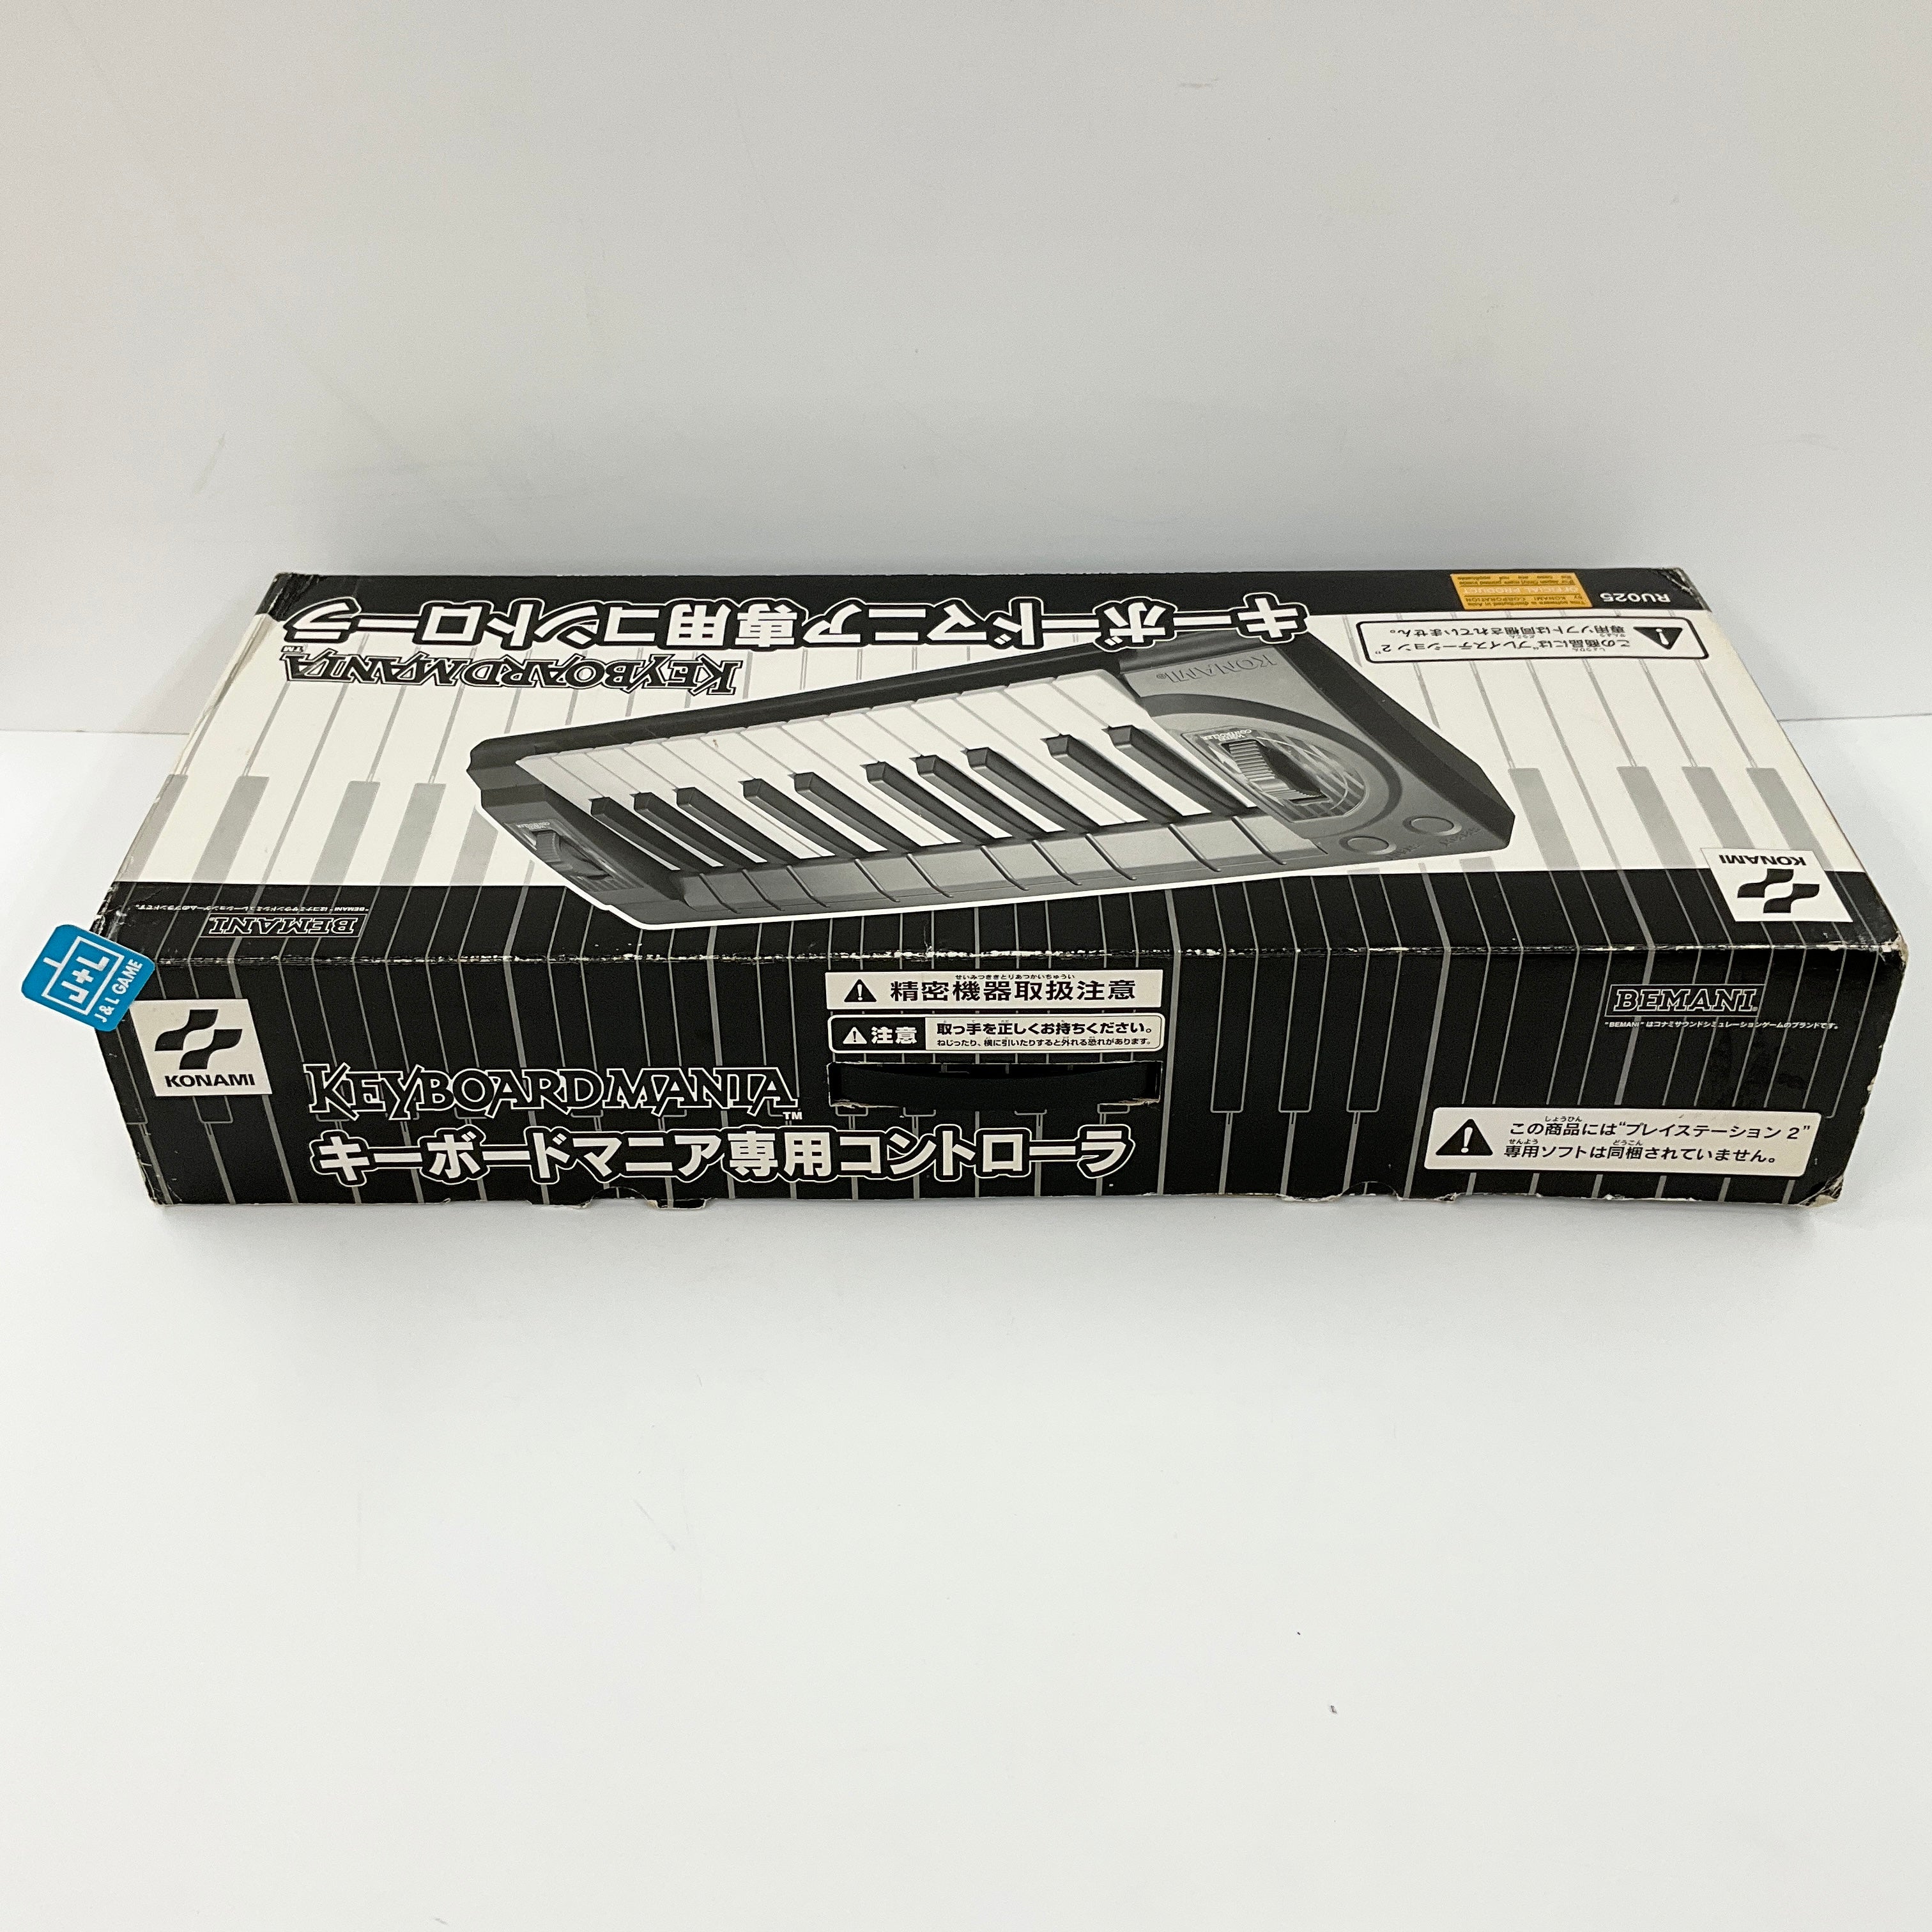 Konami KeyboardMania Controller - (PS2) PlayStation 2 [Pre-Owned] (Japanese Import) Accessories Konami   